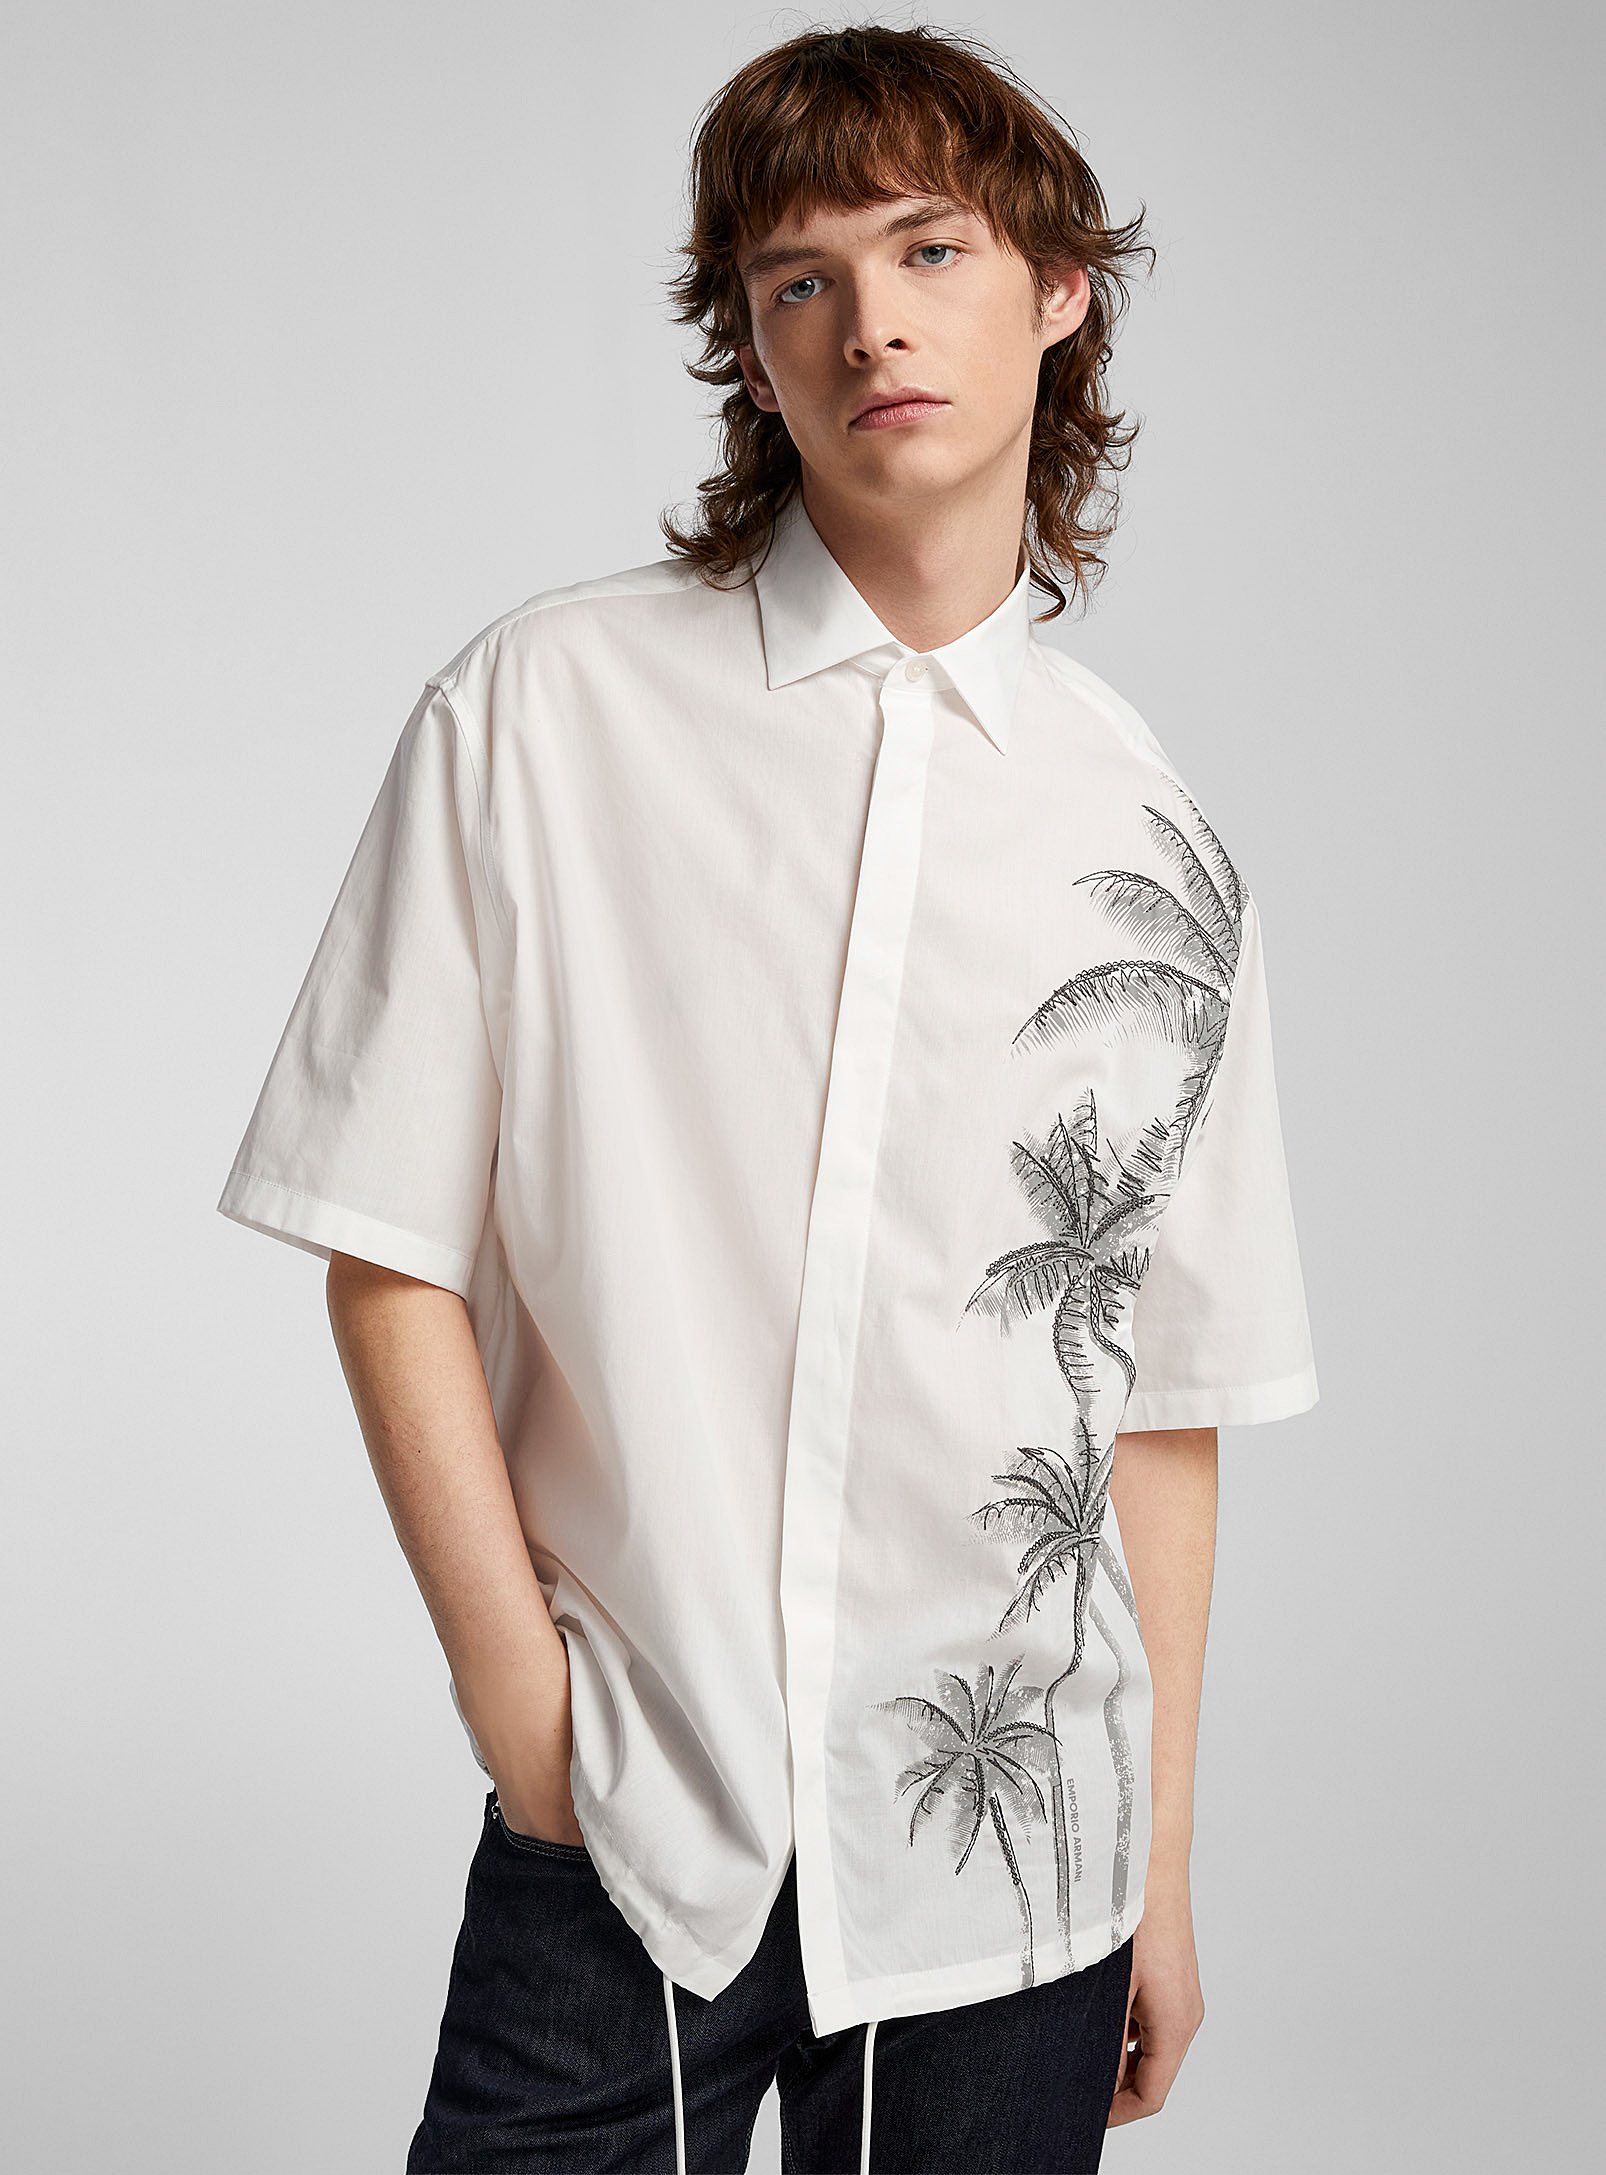 Emporio Armani - Men's Embroidered palm trees shirt